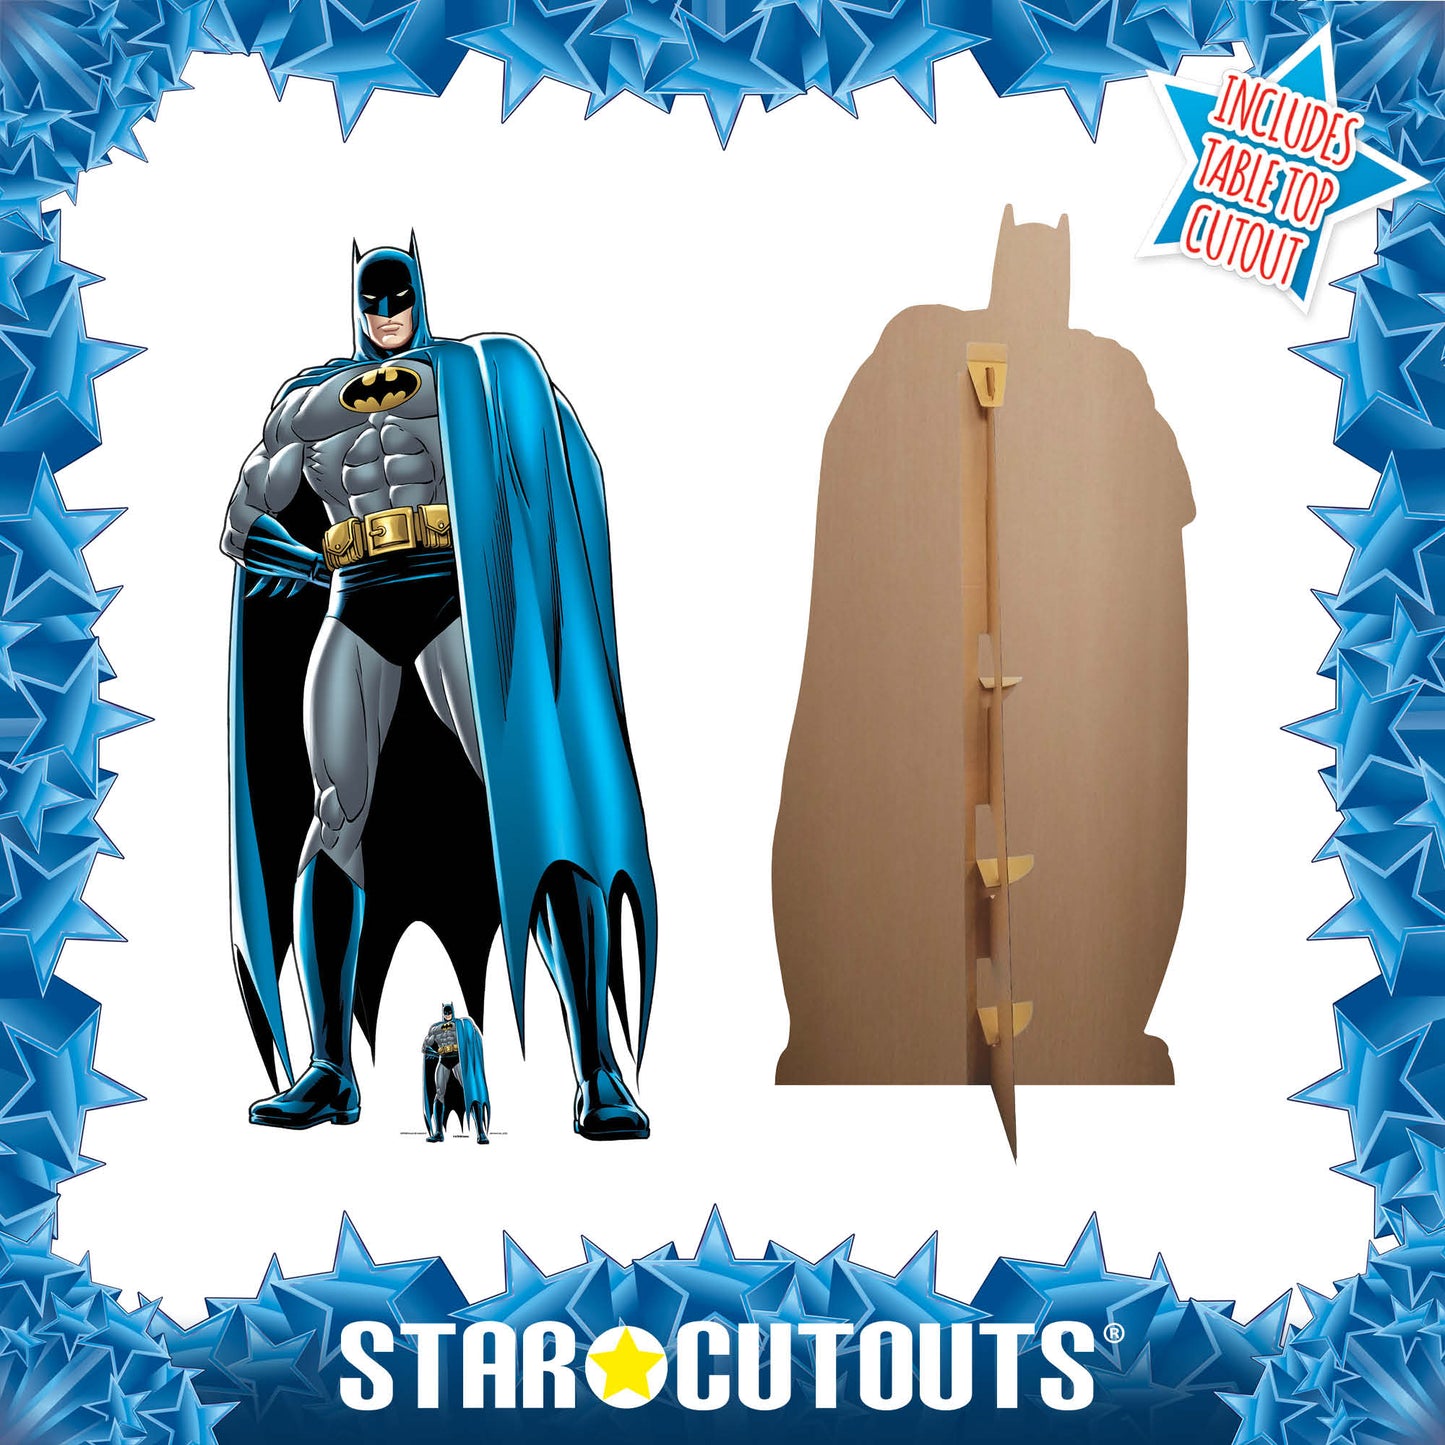 Batman Comic Style Cape Cardboard Cutout